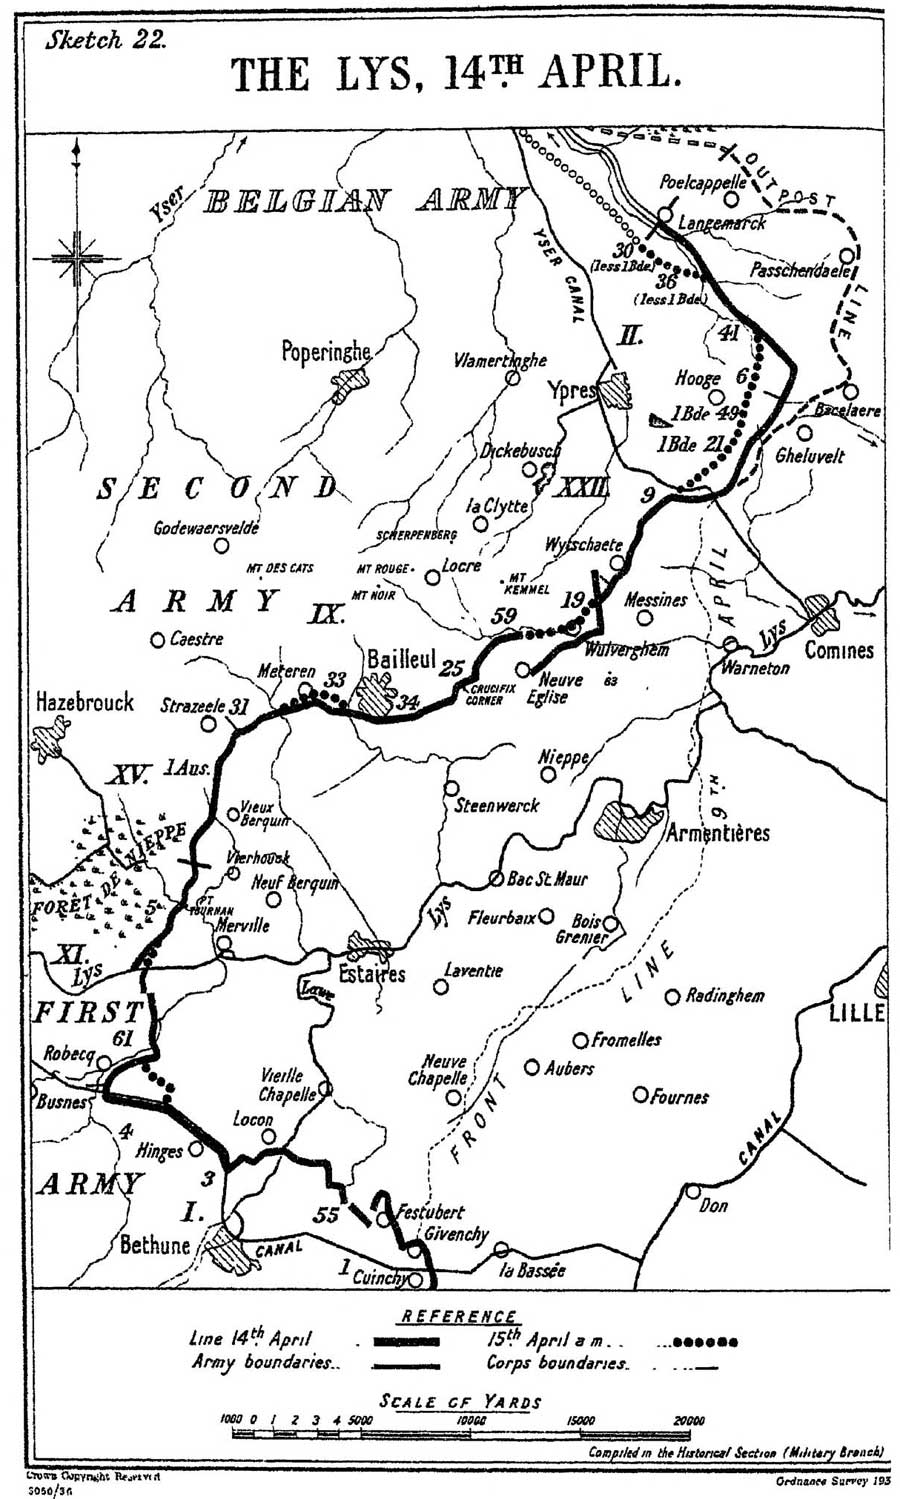 The Lys 14th April 1918